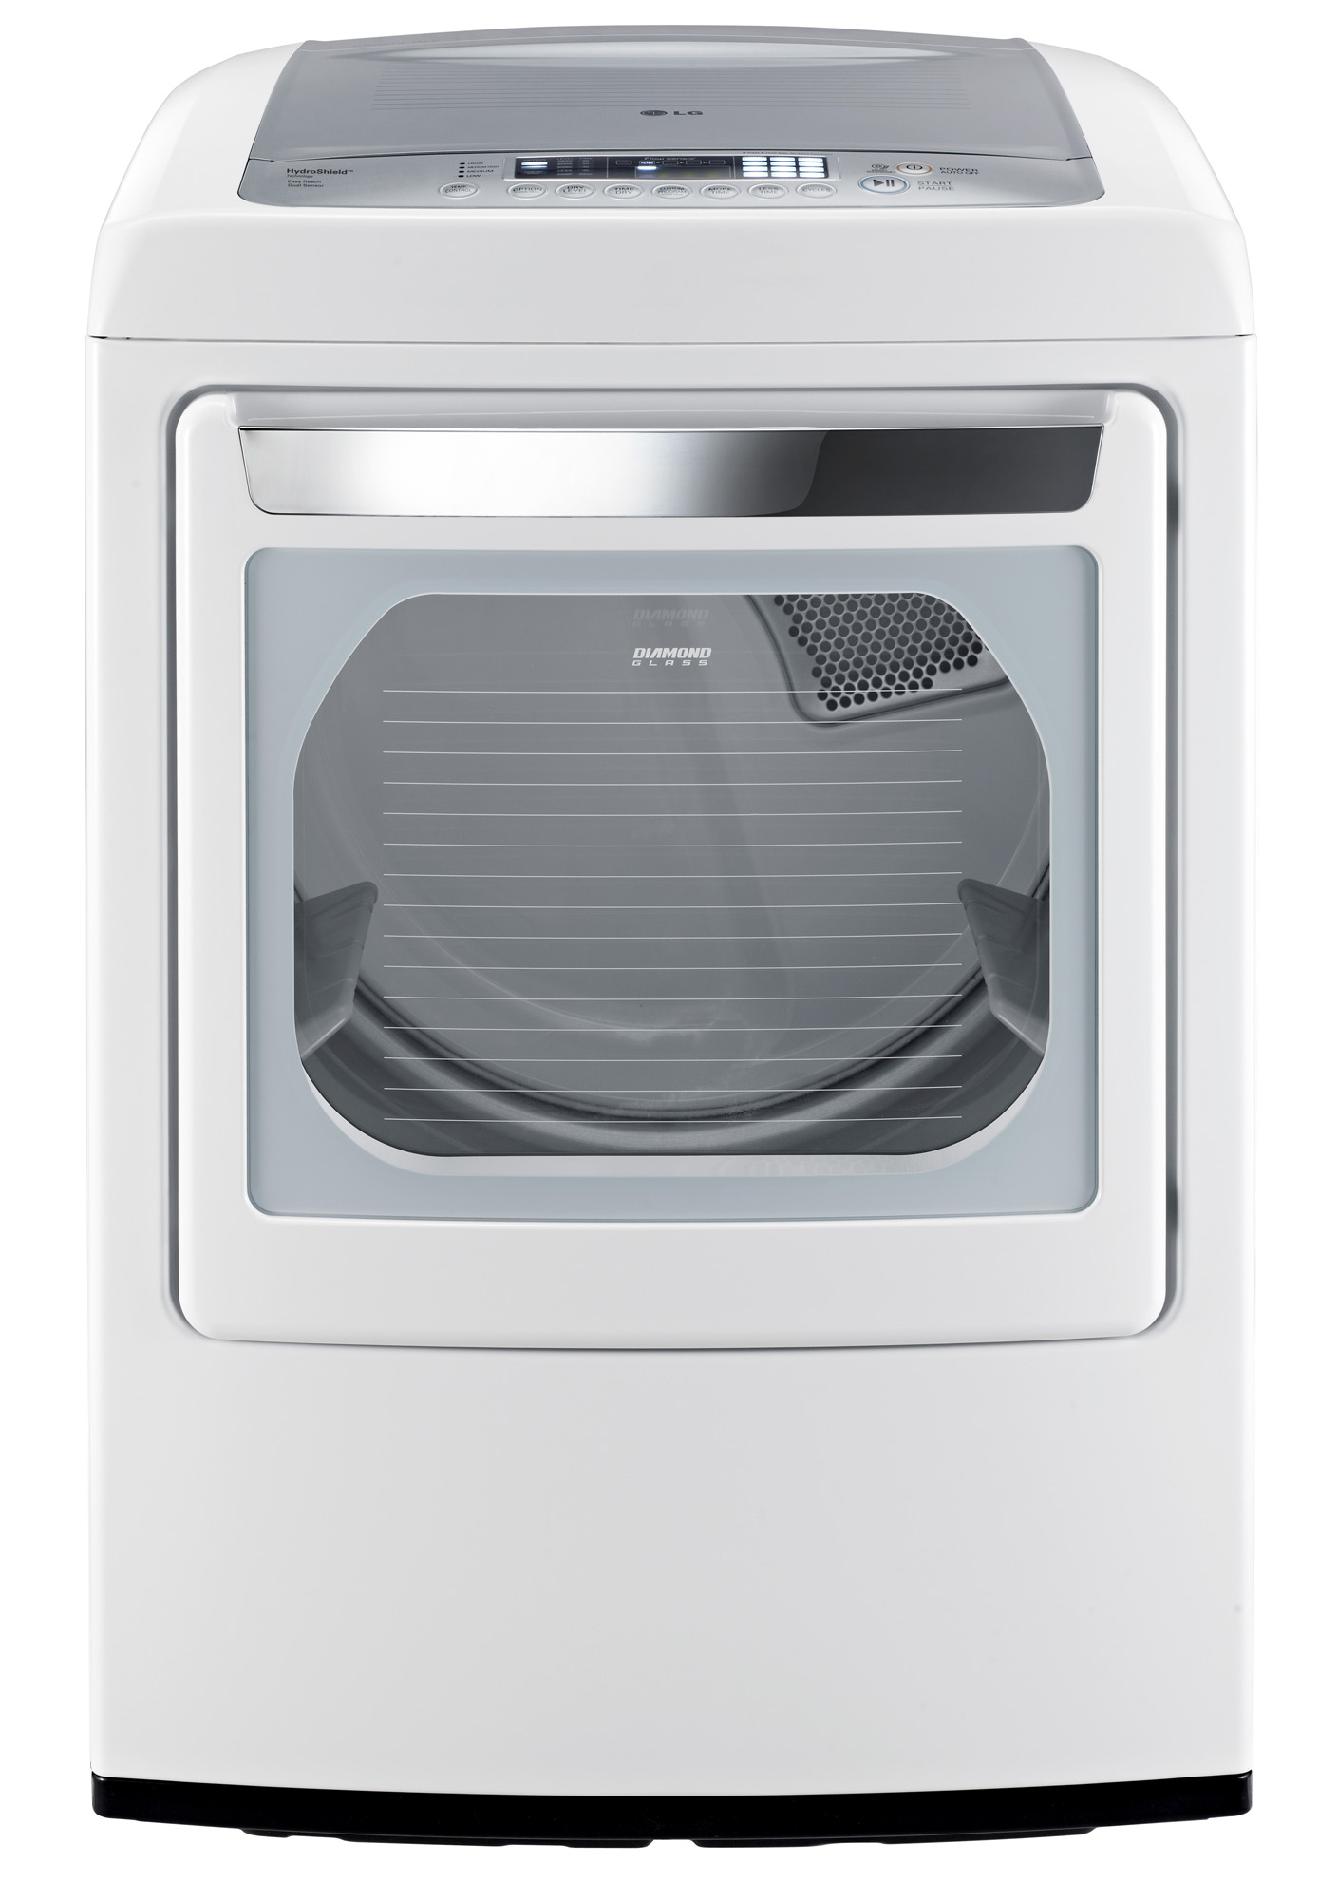 LG 7.3 cu. ft. Electric Dryer w/ SteamFresh - White